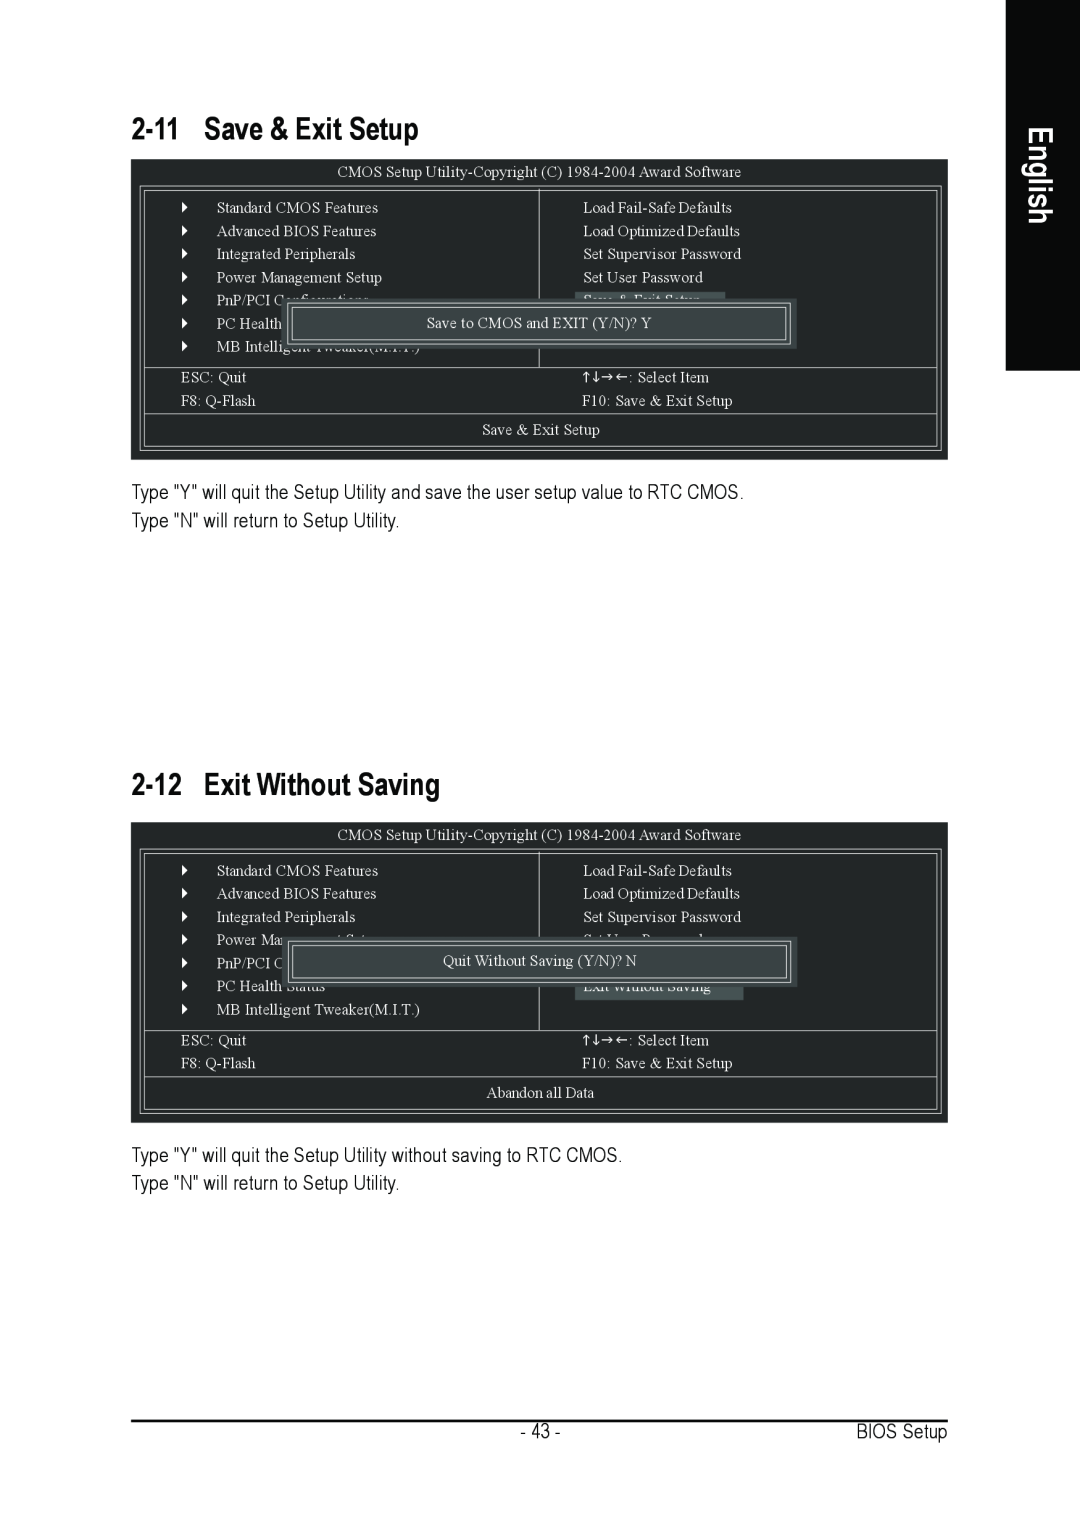 Gigabyte GA-8I865PEM-775 user manual Save & Exit Setup, Exit Without Saving, English, Type N will return to Setup Utility 